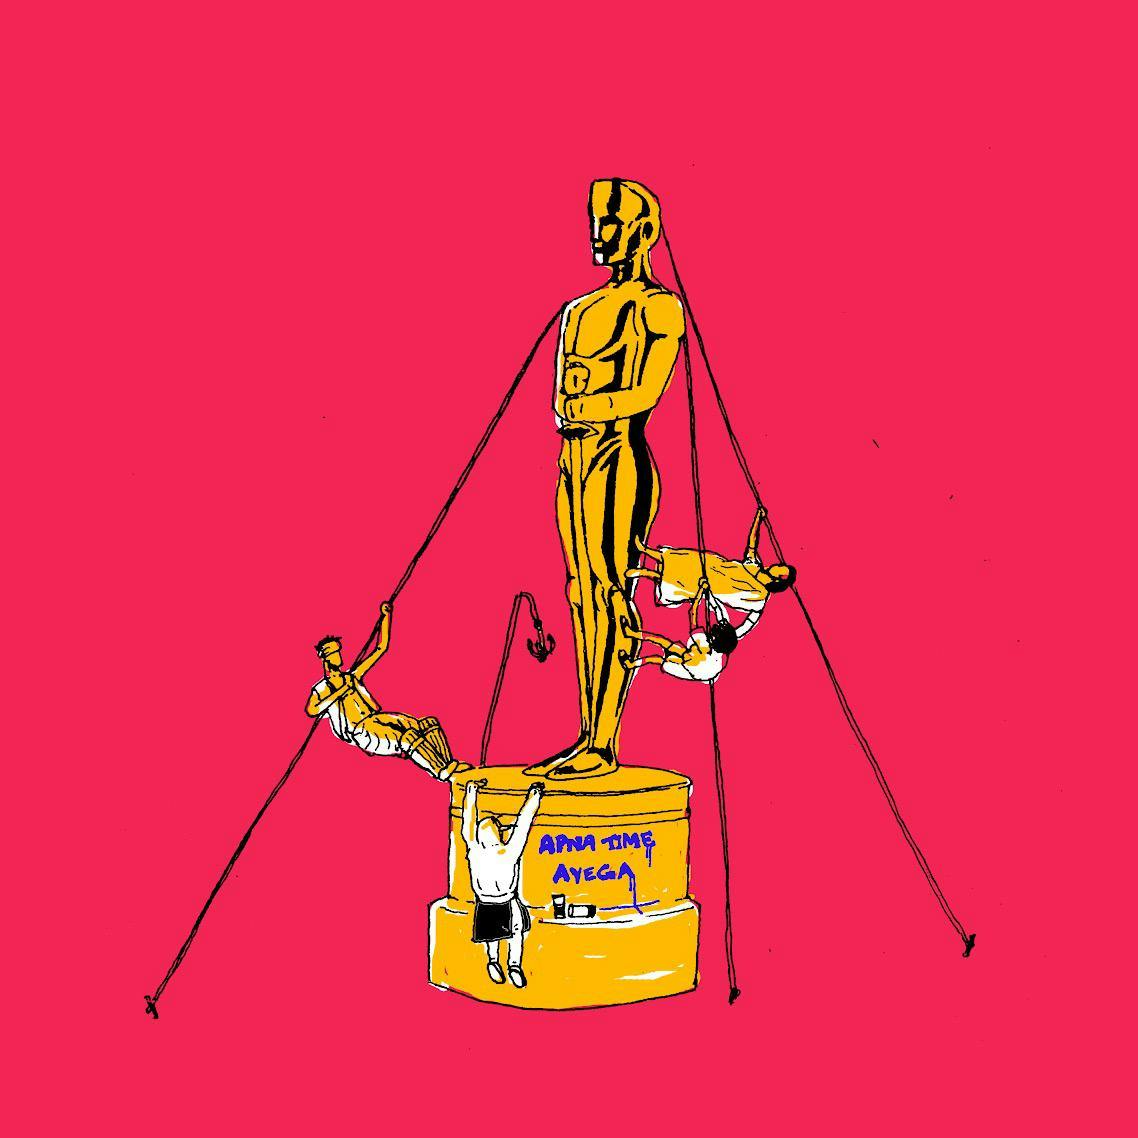 The Oscars (Abhilash Baddha for The Juggernaut)